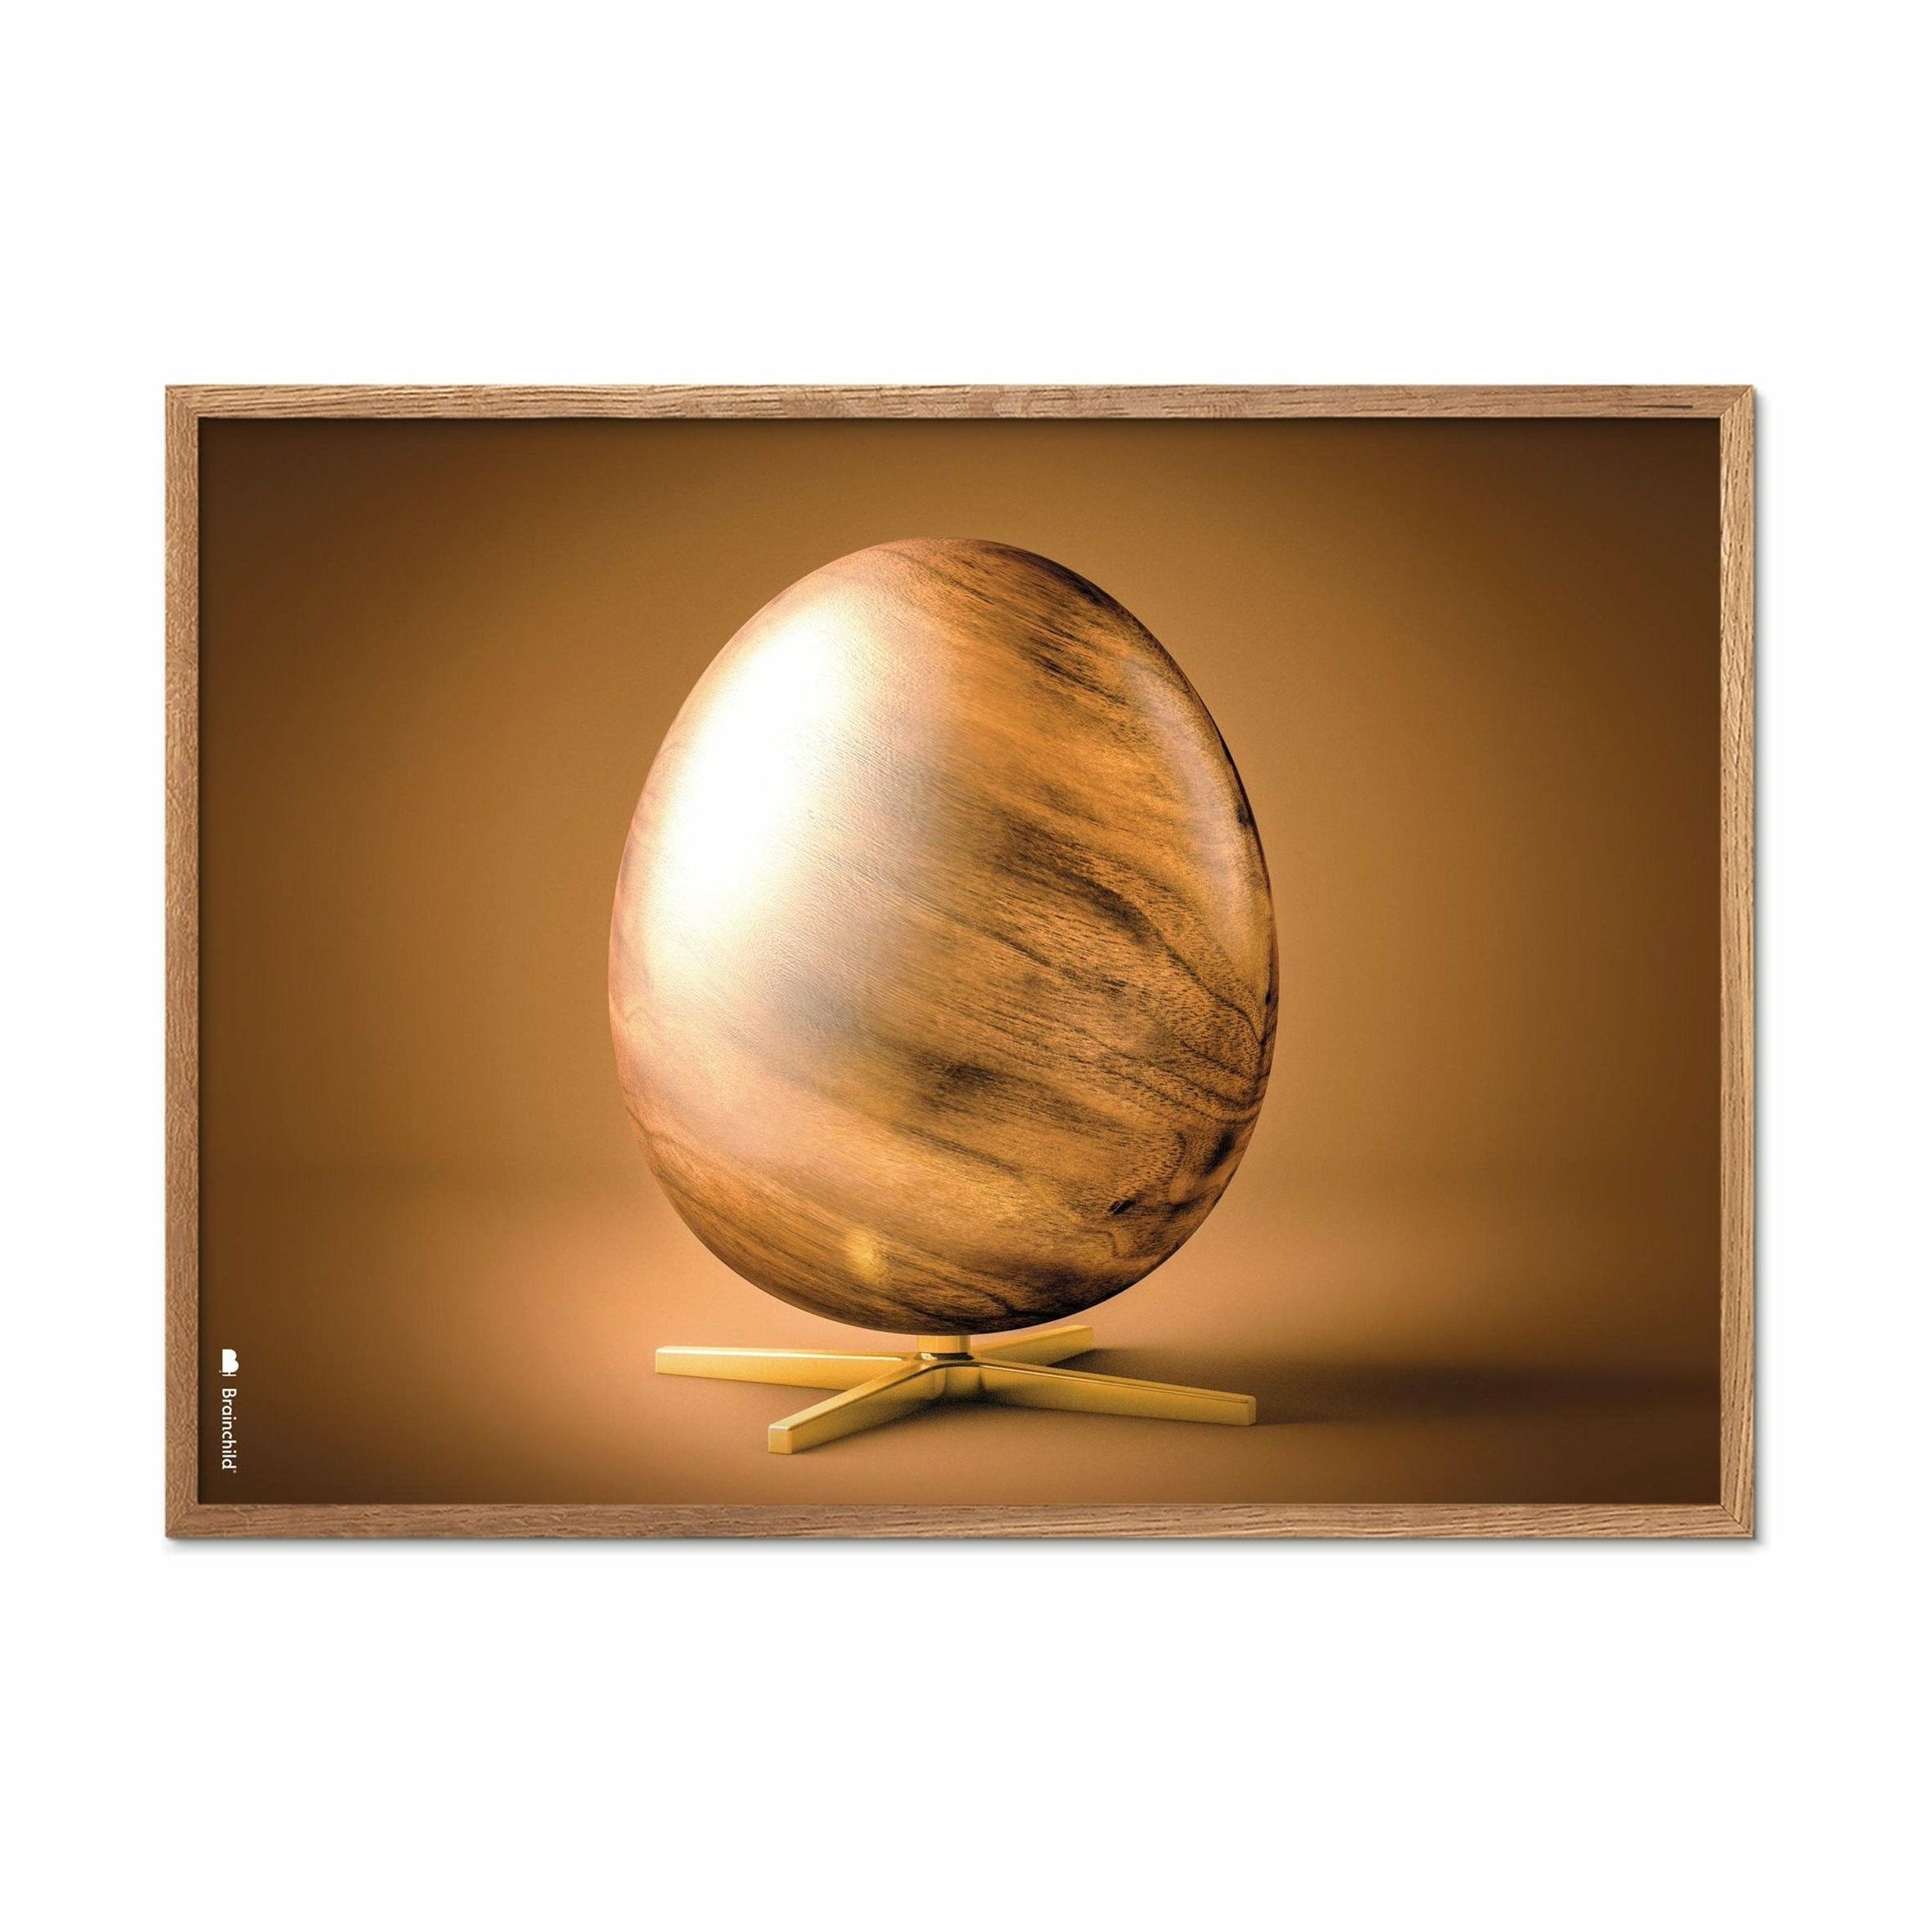 Póster de formato de cruce de huevo de creación, marco hecho de madera clara de 30x40 cm, marrón